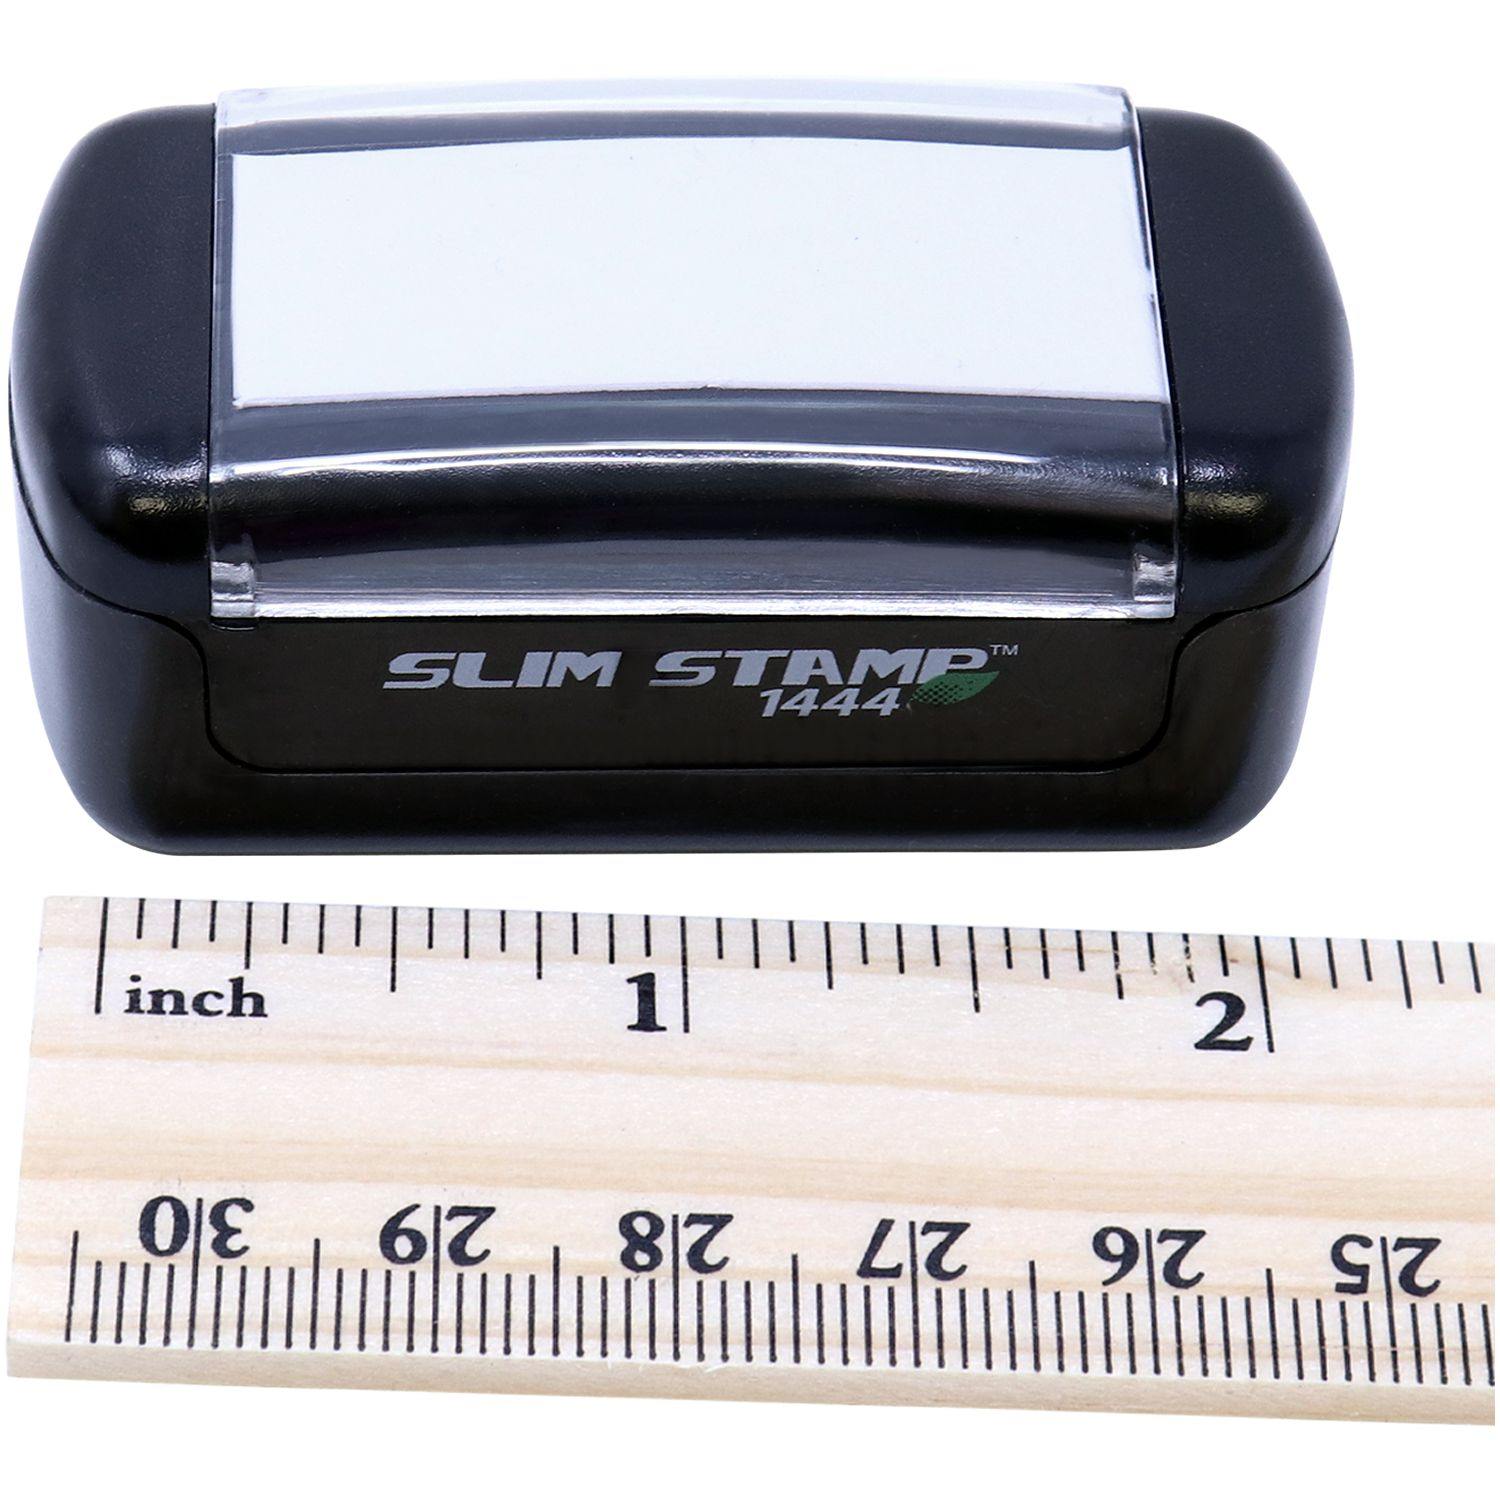 Measurement Slim Pre Inked Plaintiffs Exhibit Stamp with Ruler